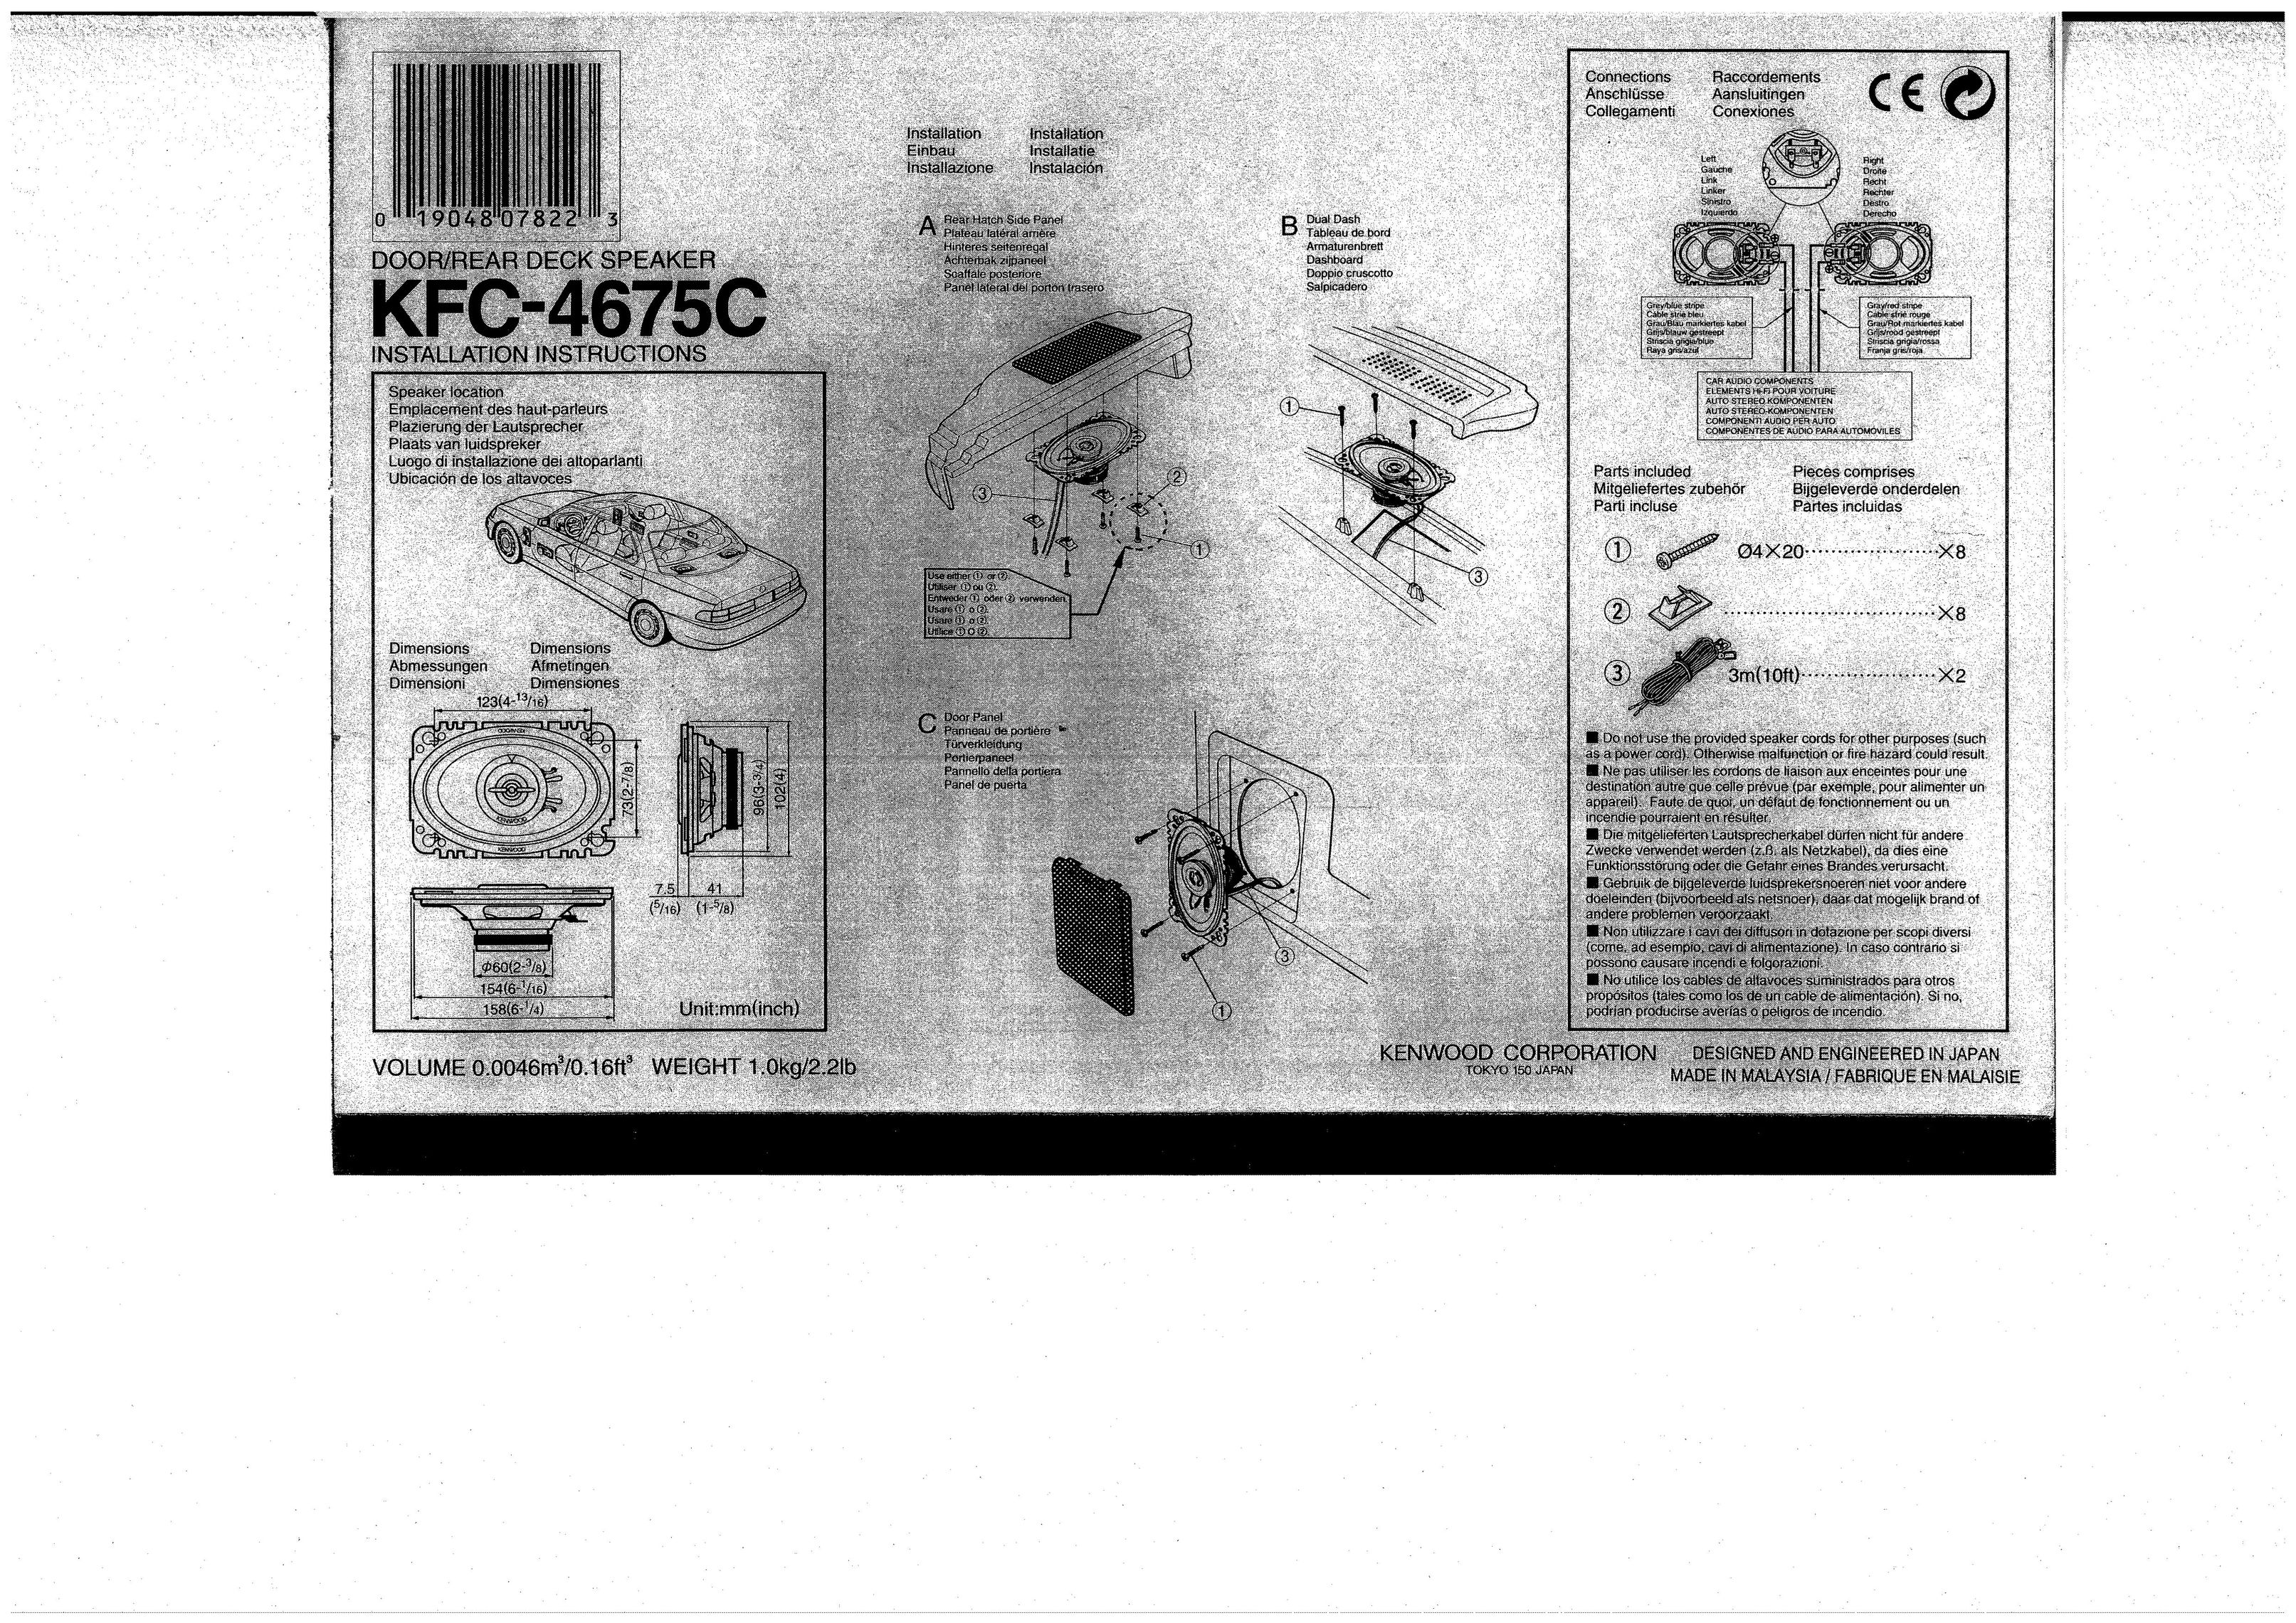 Kenwood KFC-4675C Car Speaker User Manual